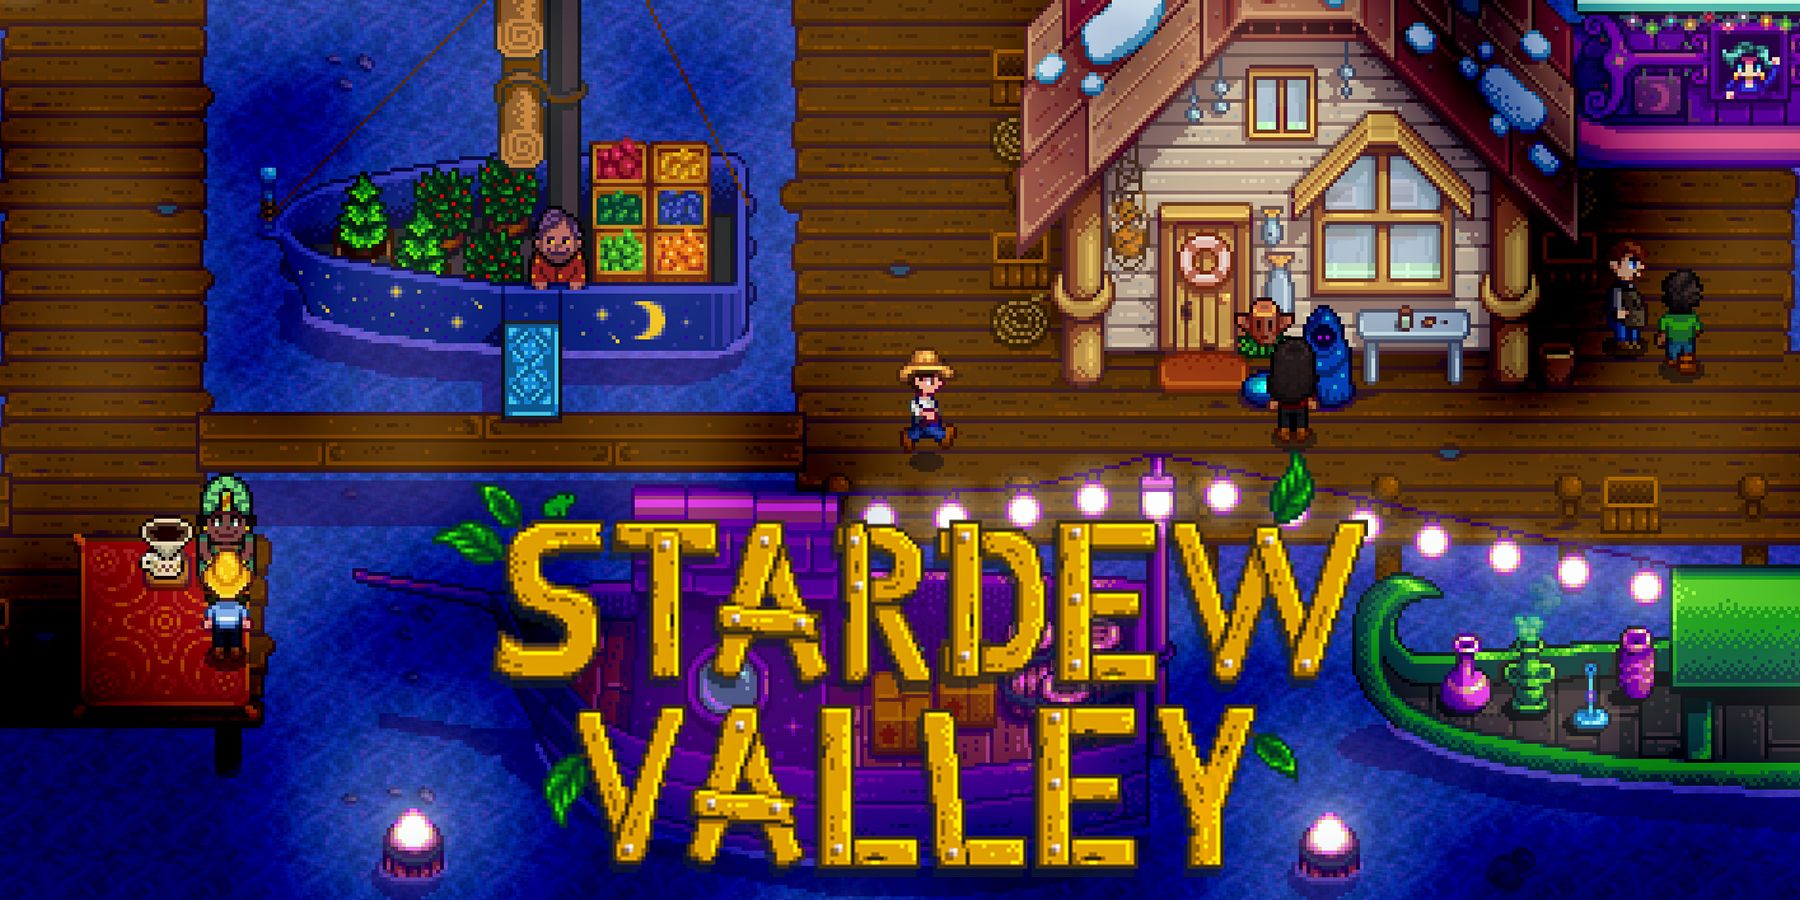 Stardew Valley night market with game logo